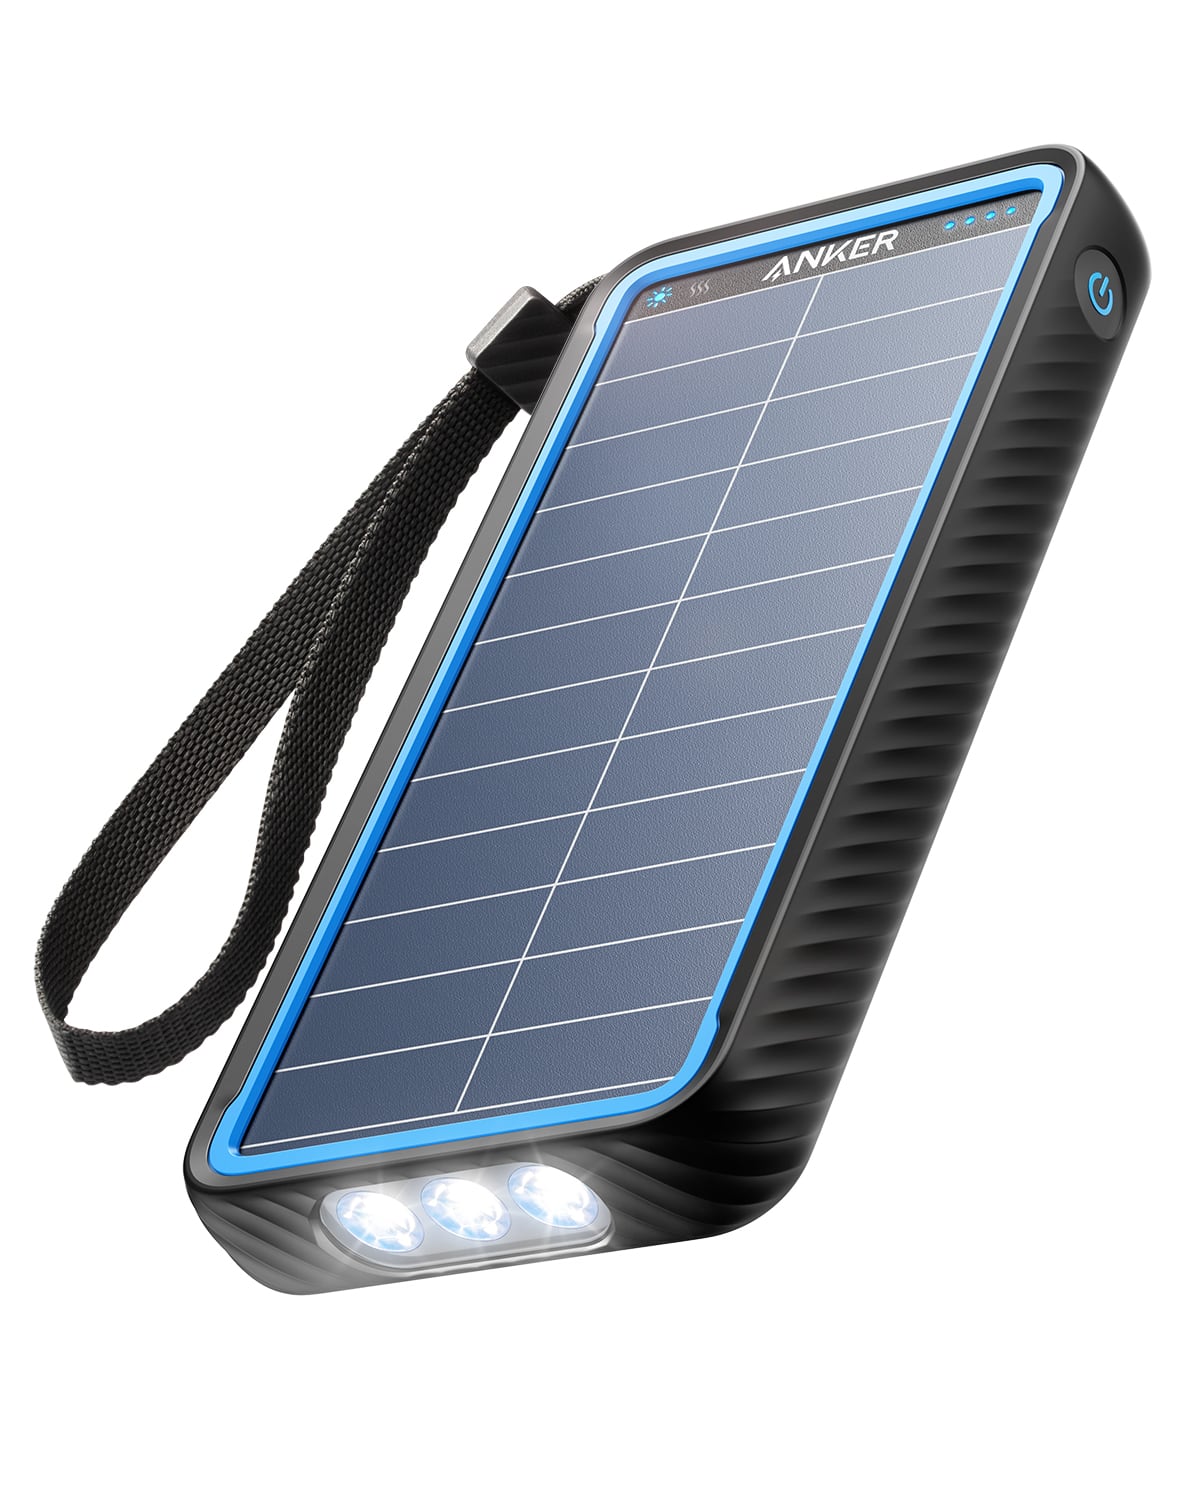 PowerCore Solar 10000 - Anker US